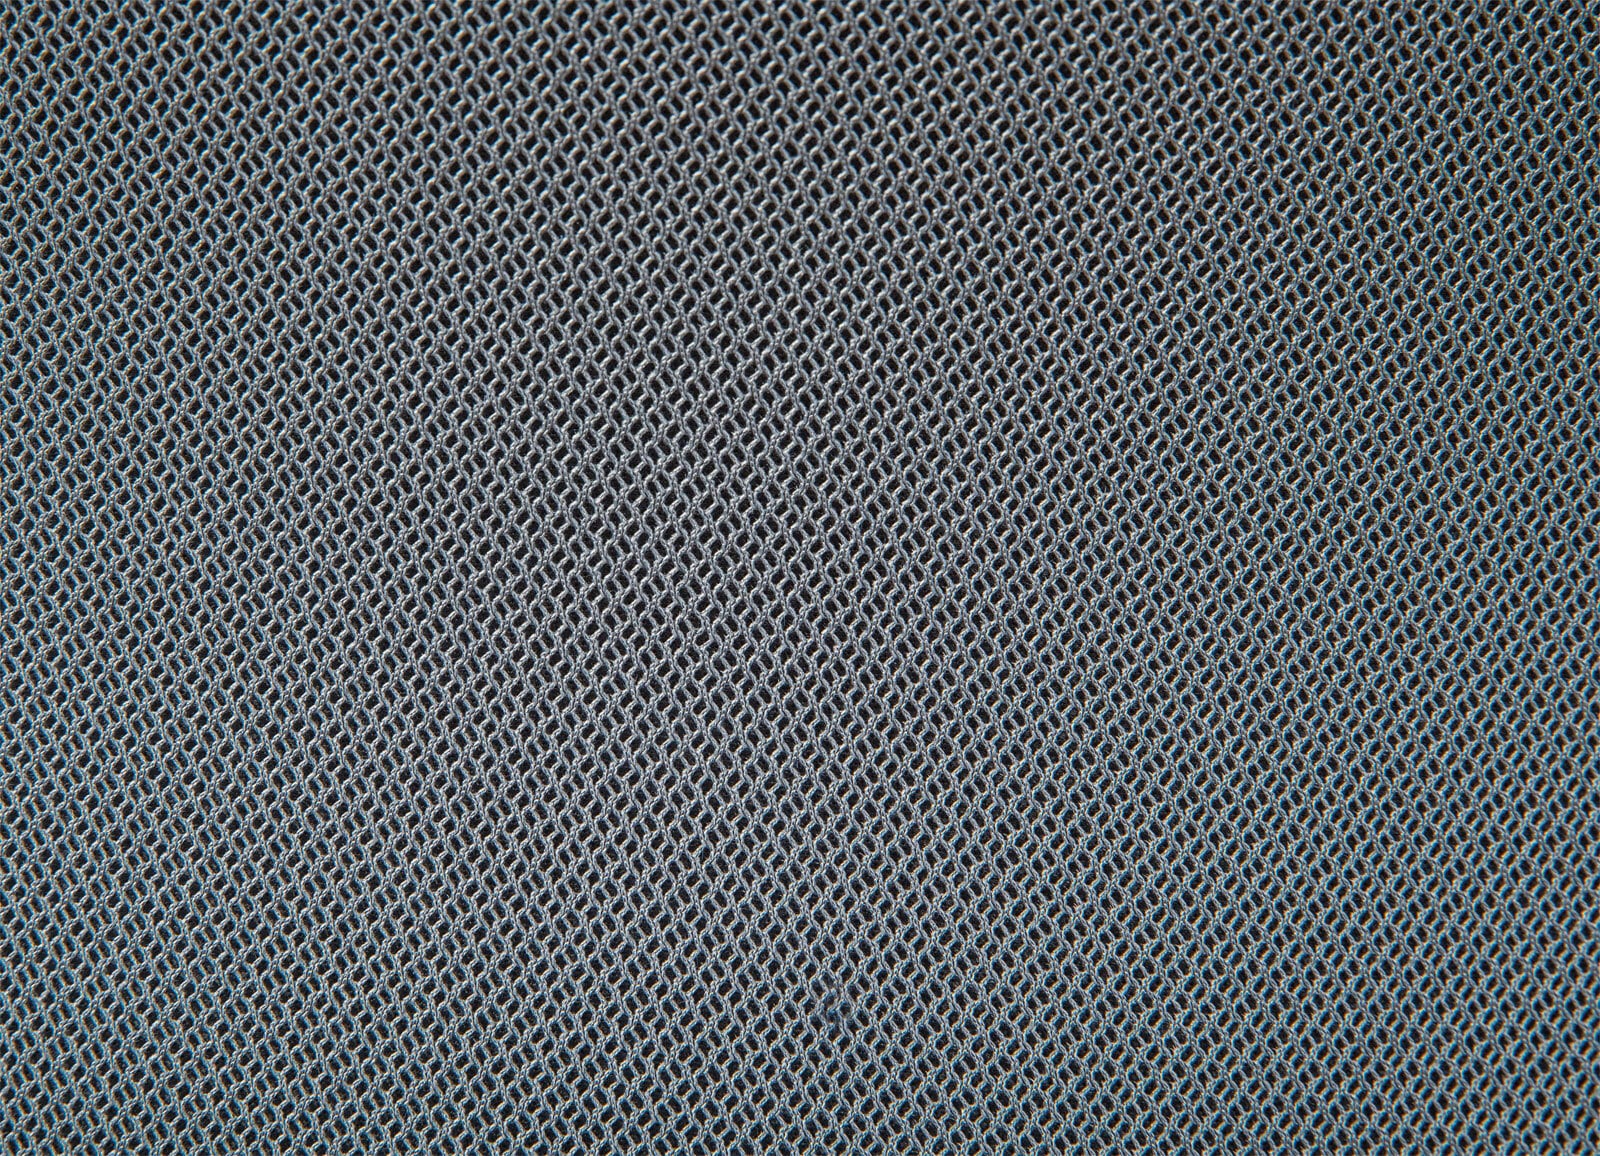 CASAVANTI Kinderstuhl JEREMY grau/weiß 52 x 92-102 x 56 cm